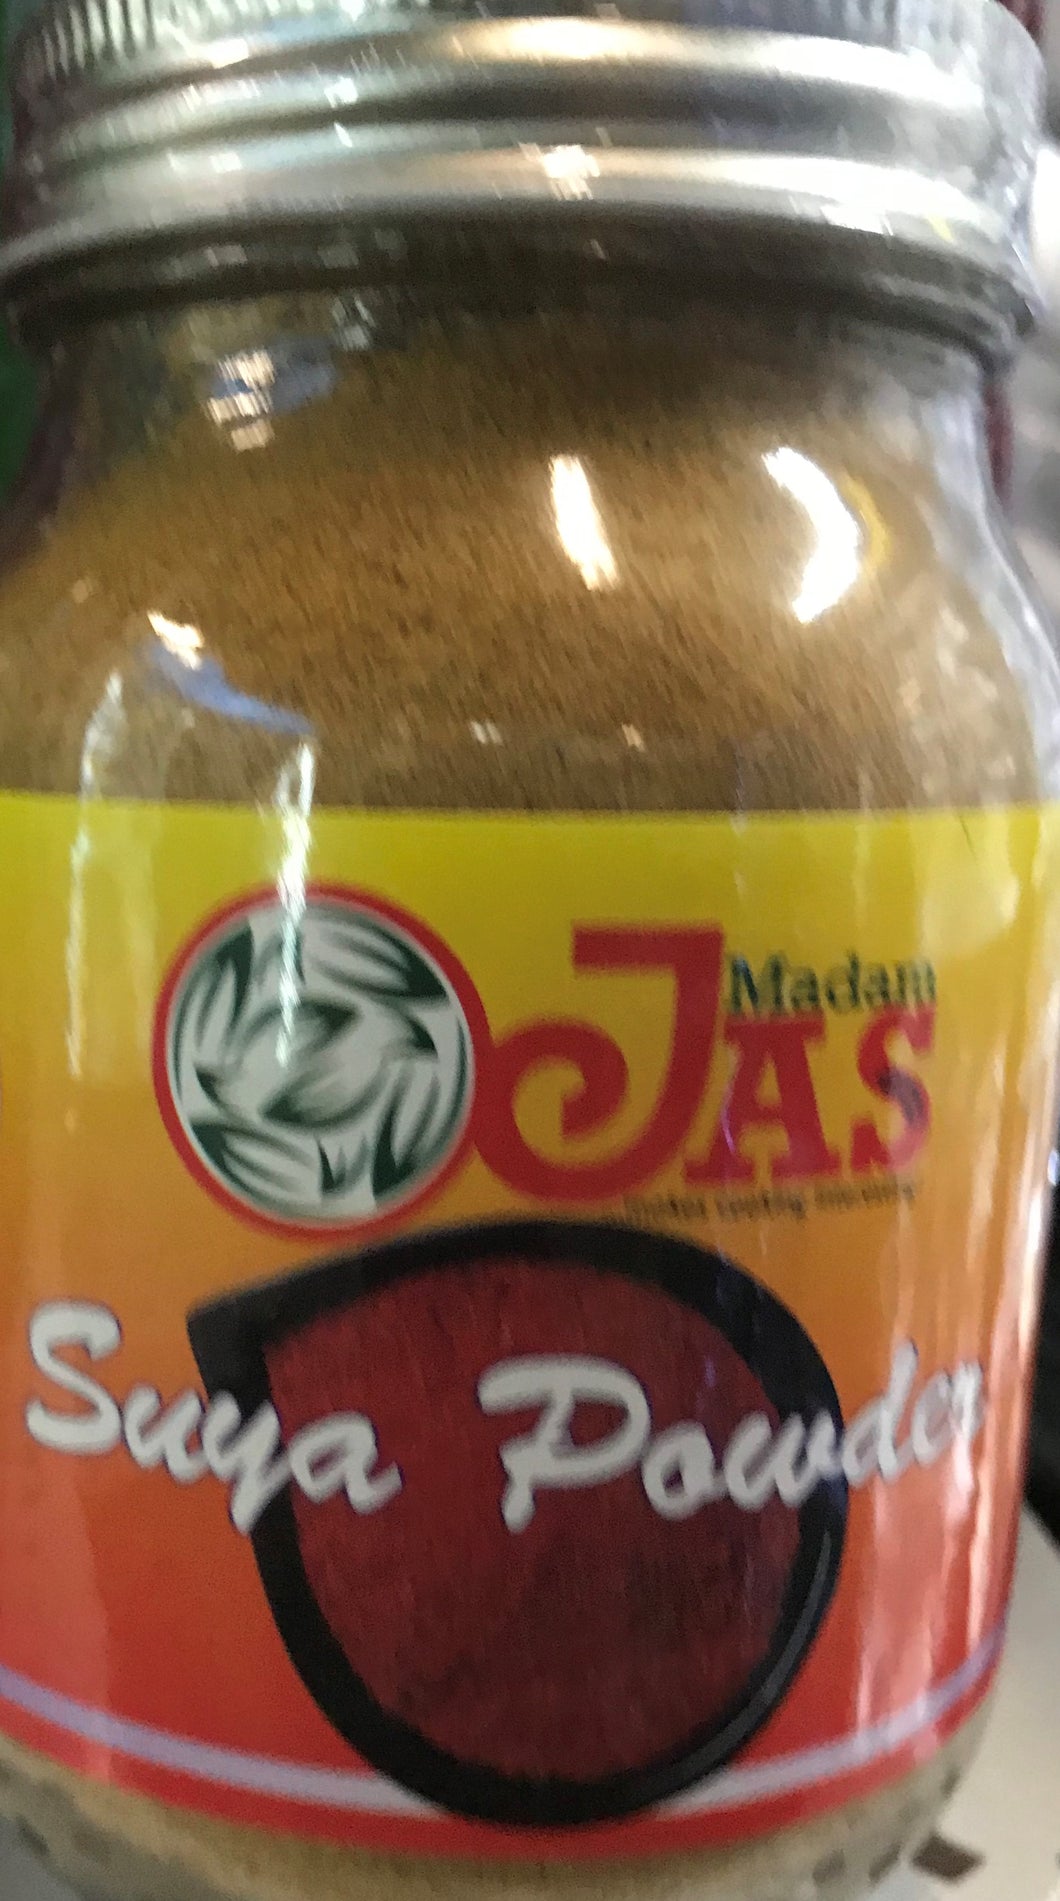 Madam Jas Suya Spice 8oz